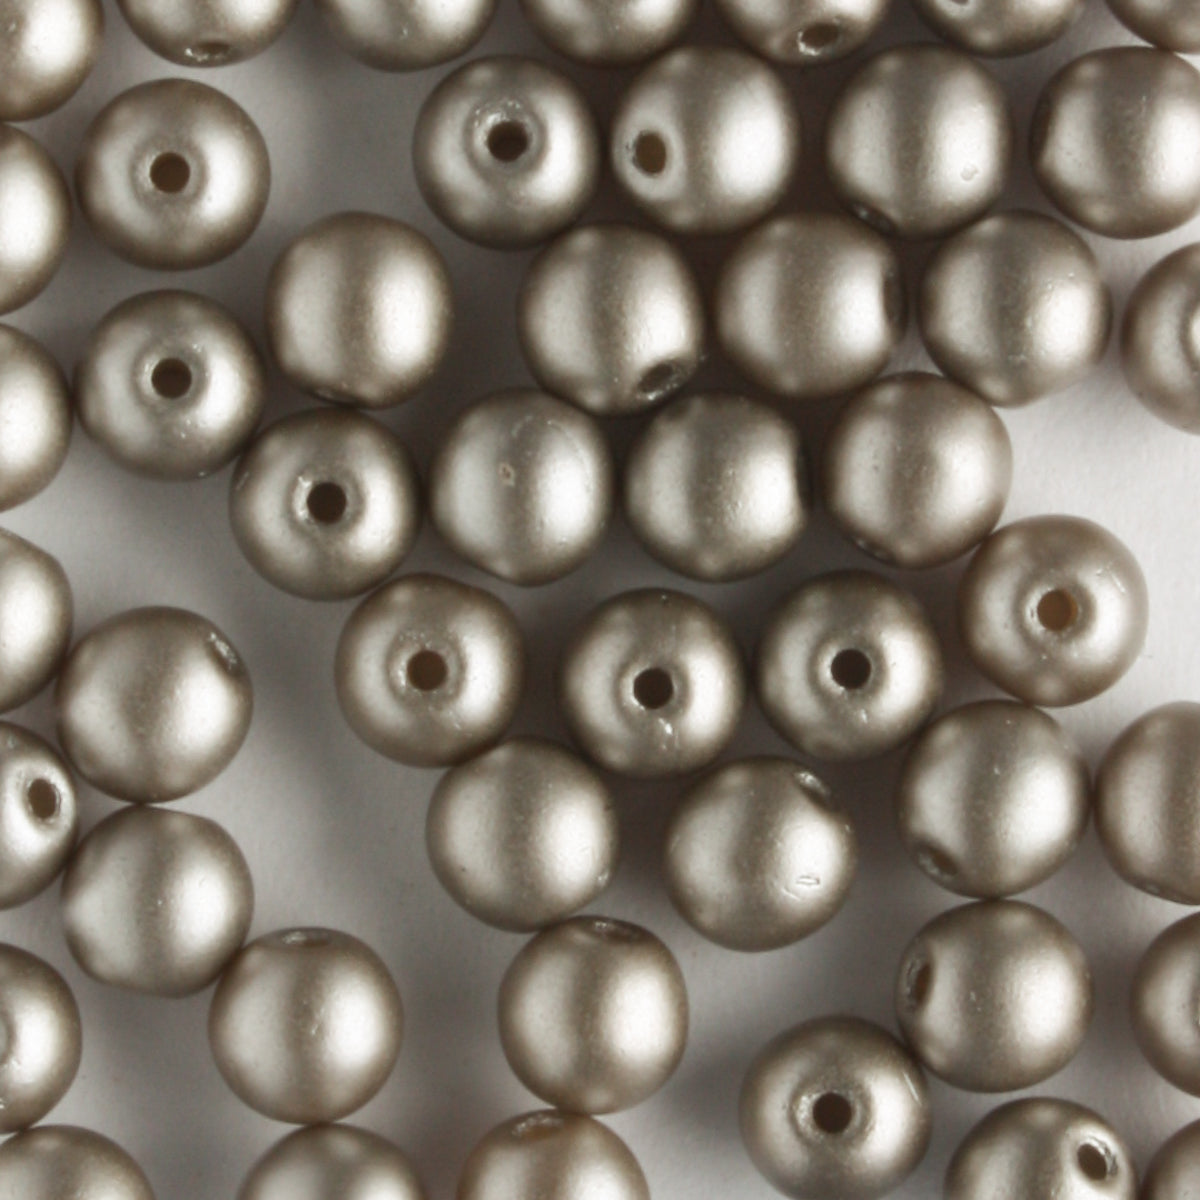 4mm Round Glass Pearls Brown Sugar - 100 beads